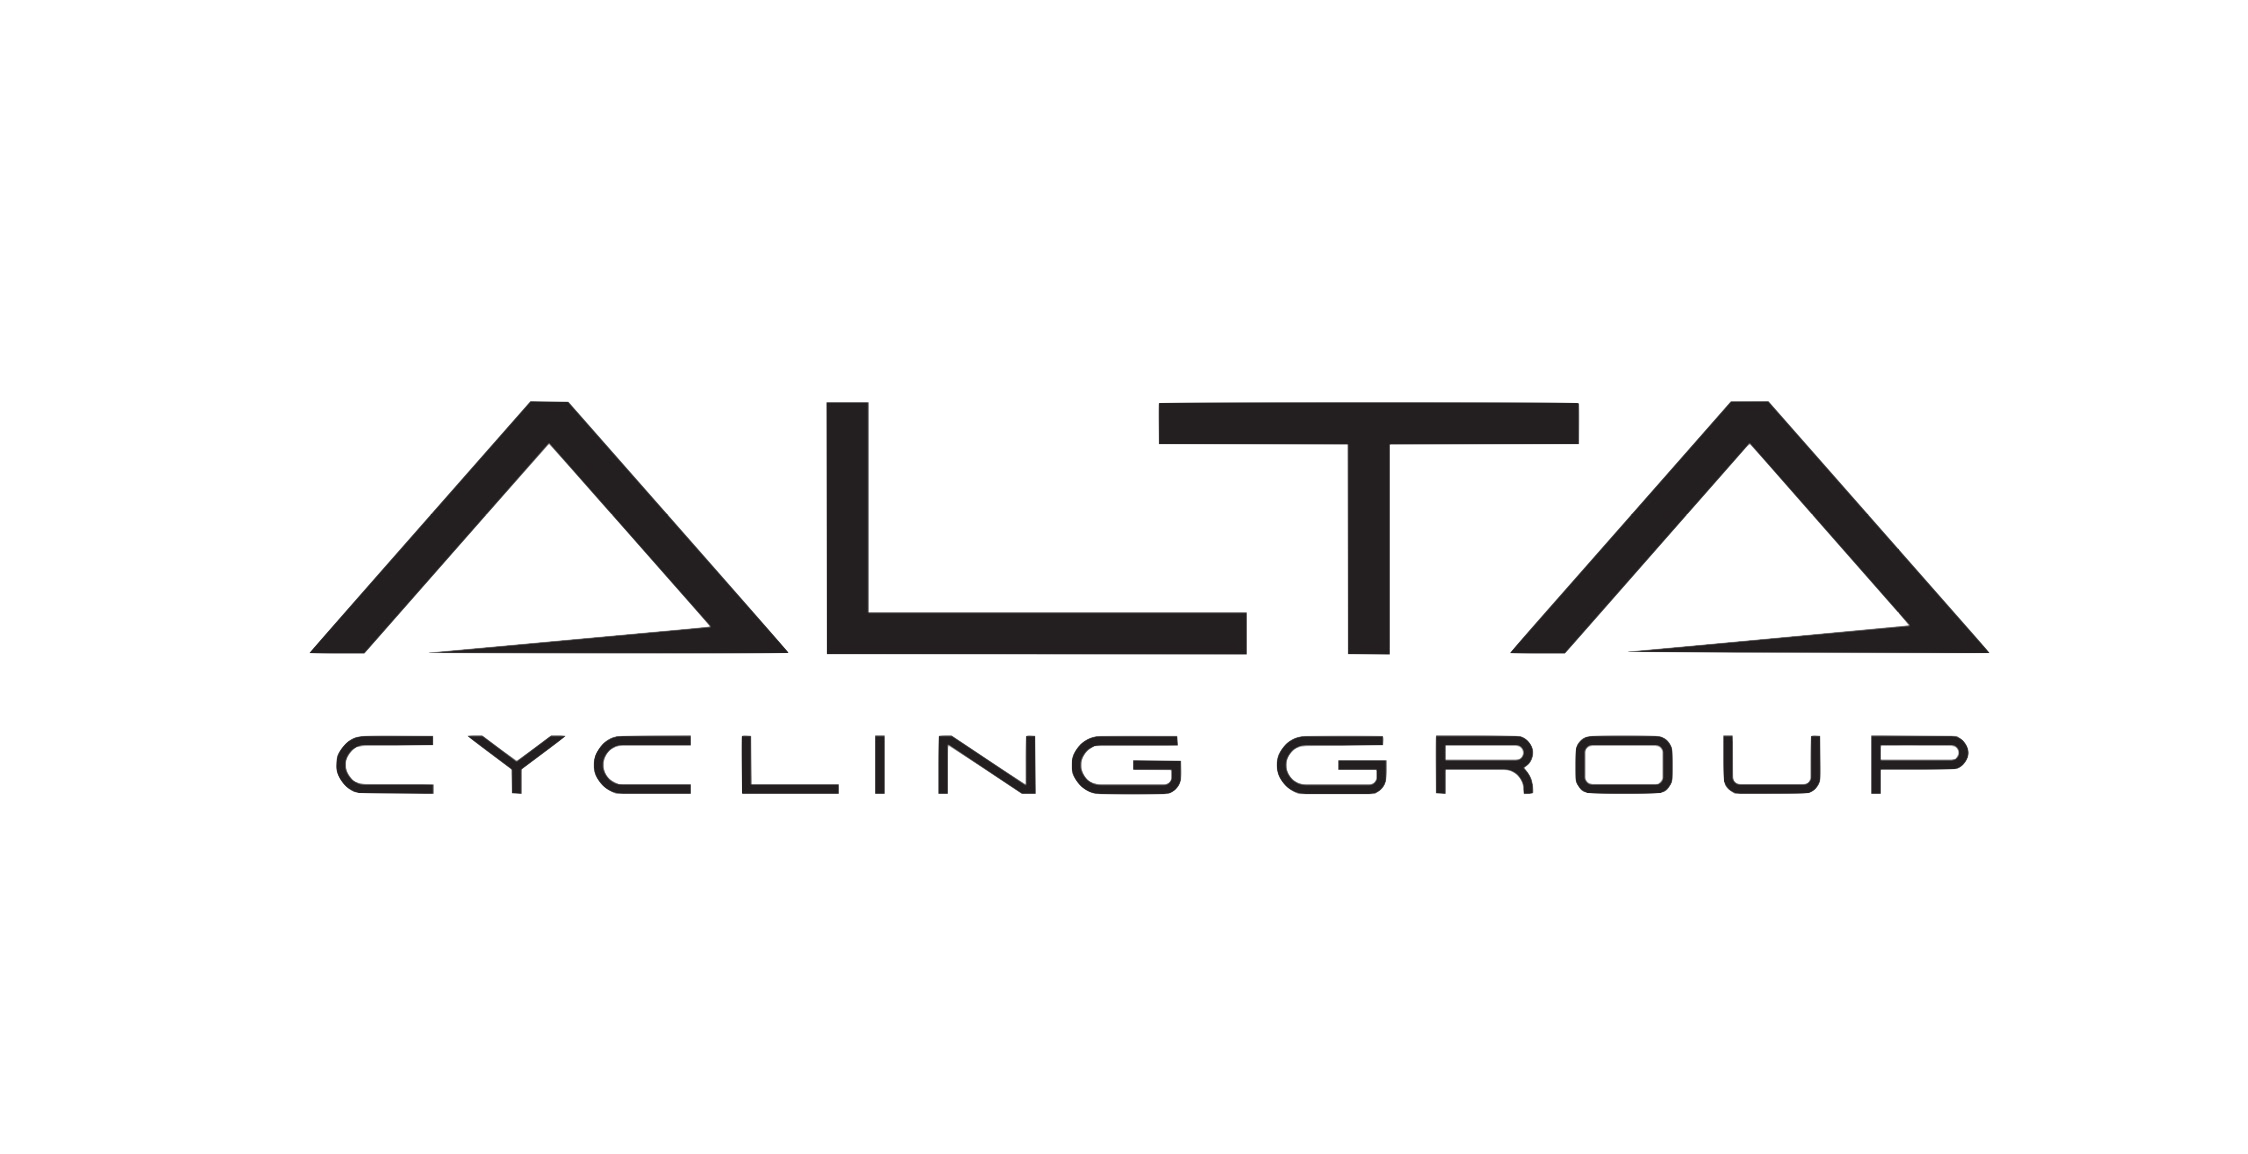 Alta Logo.png